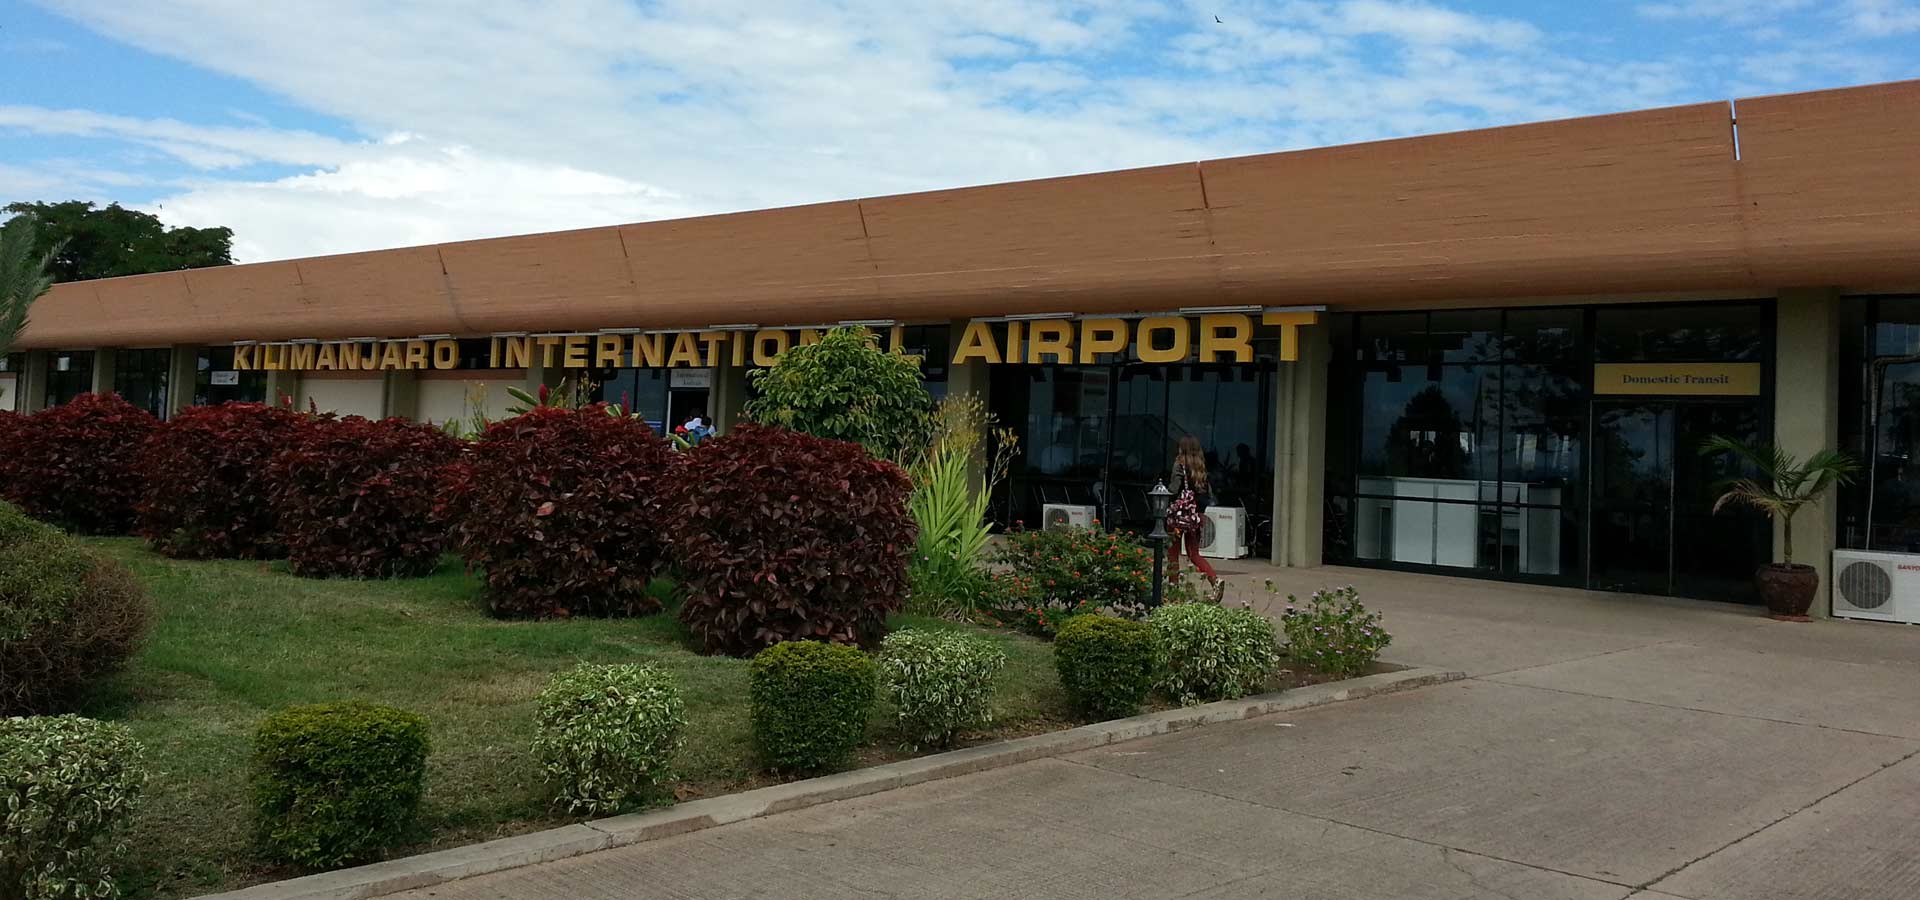 Kilimanjaro Airport